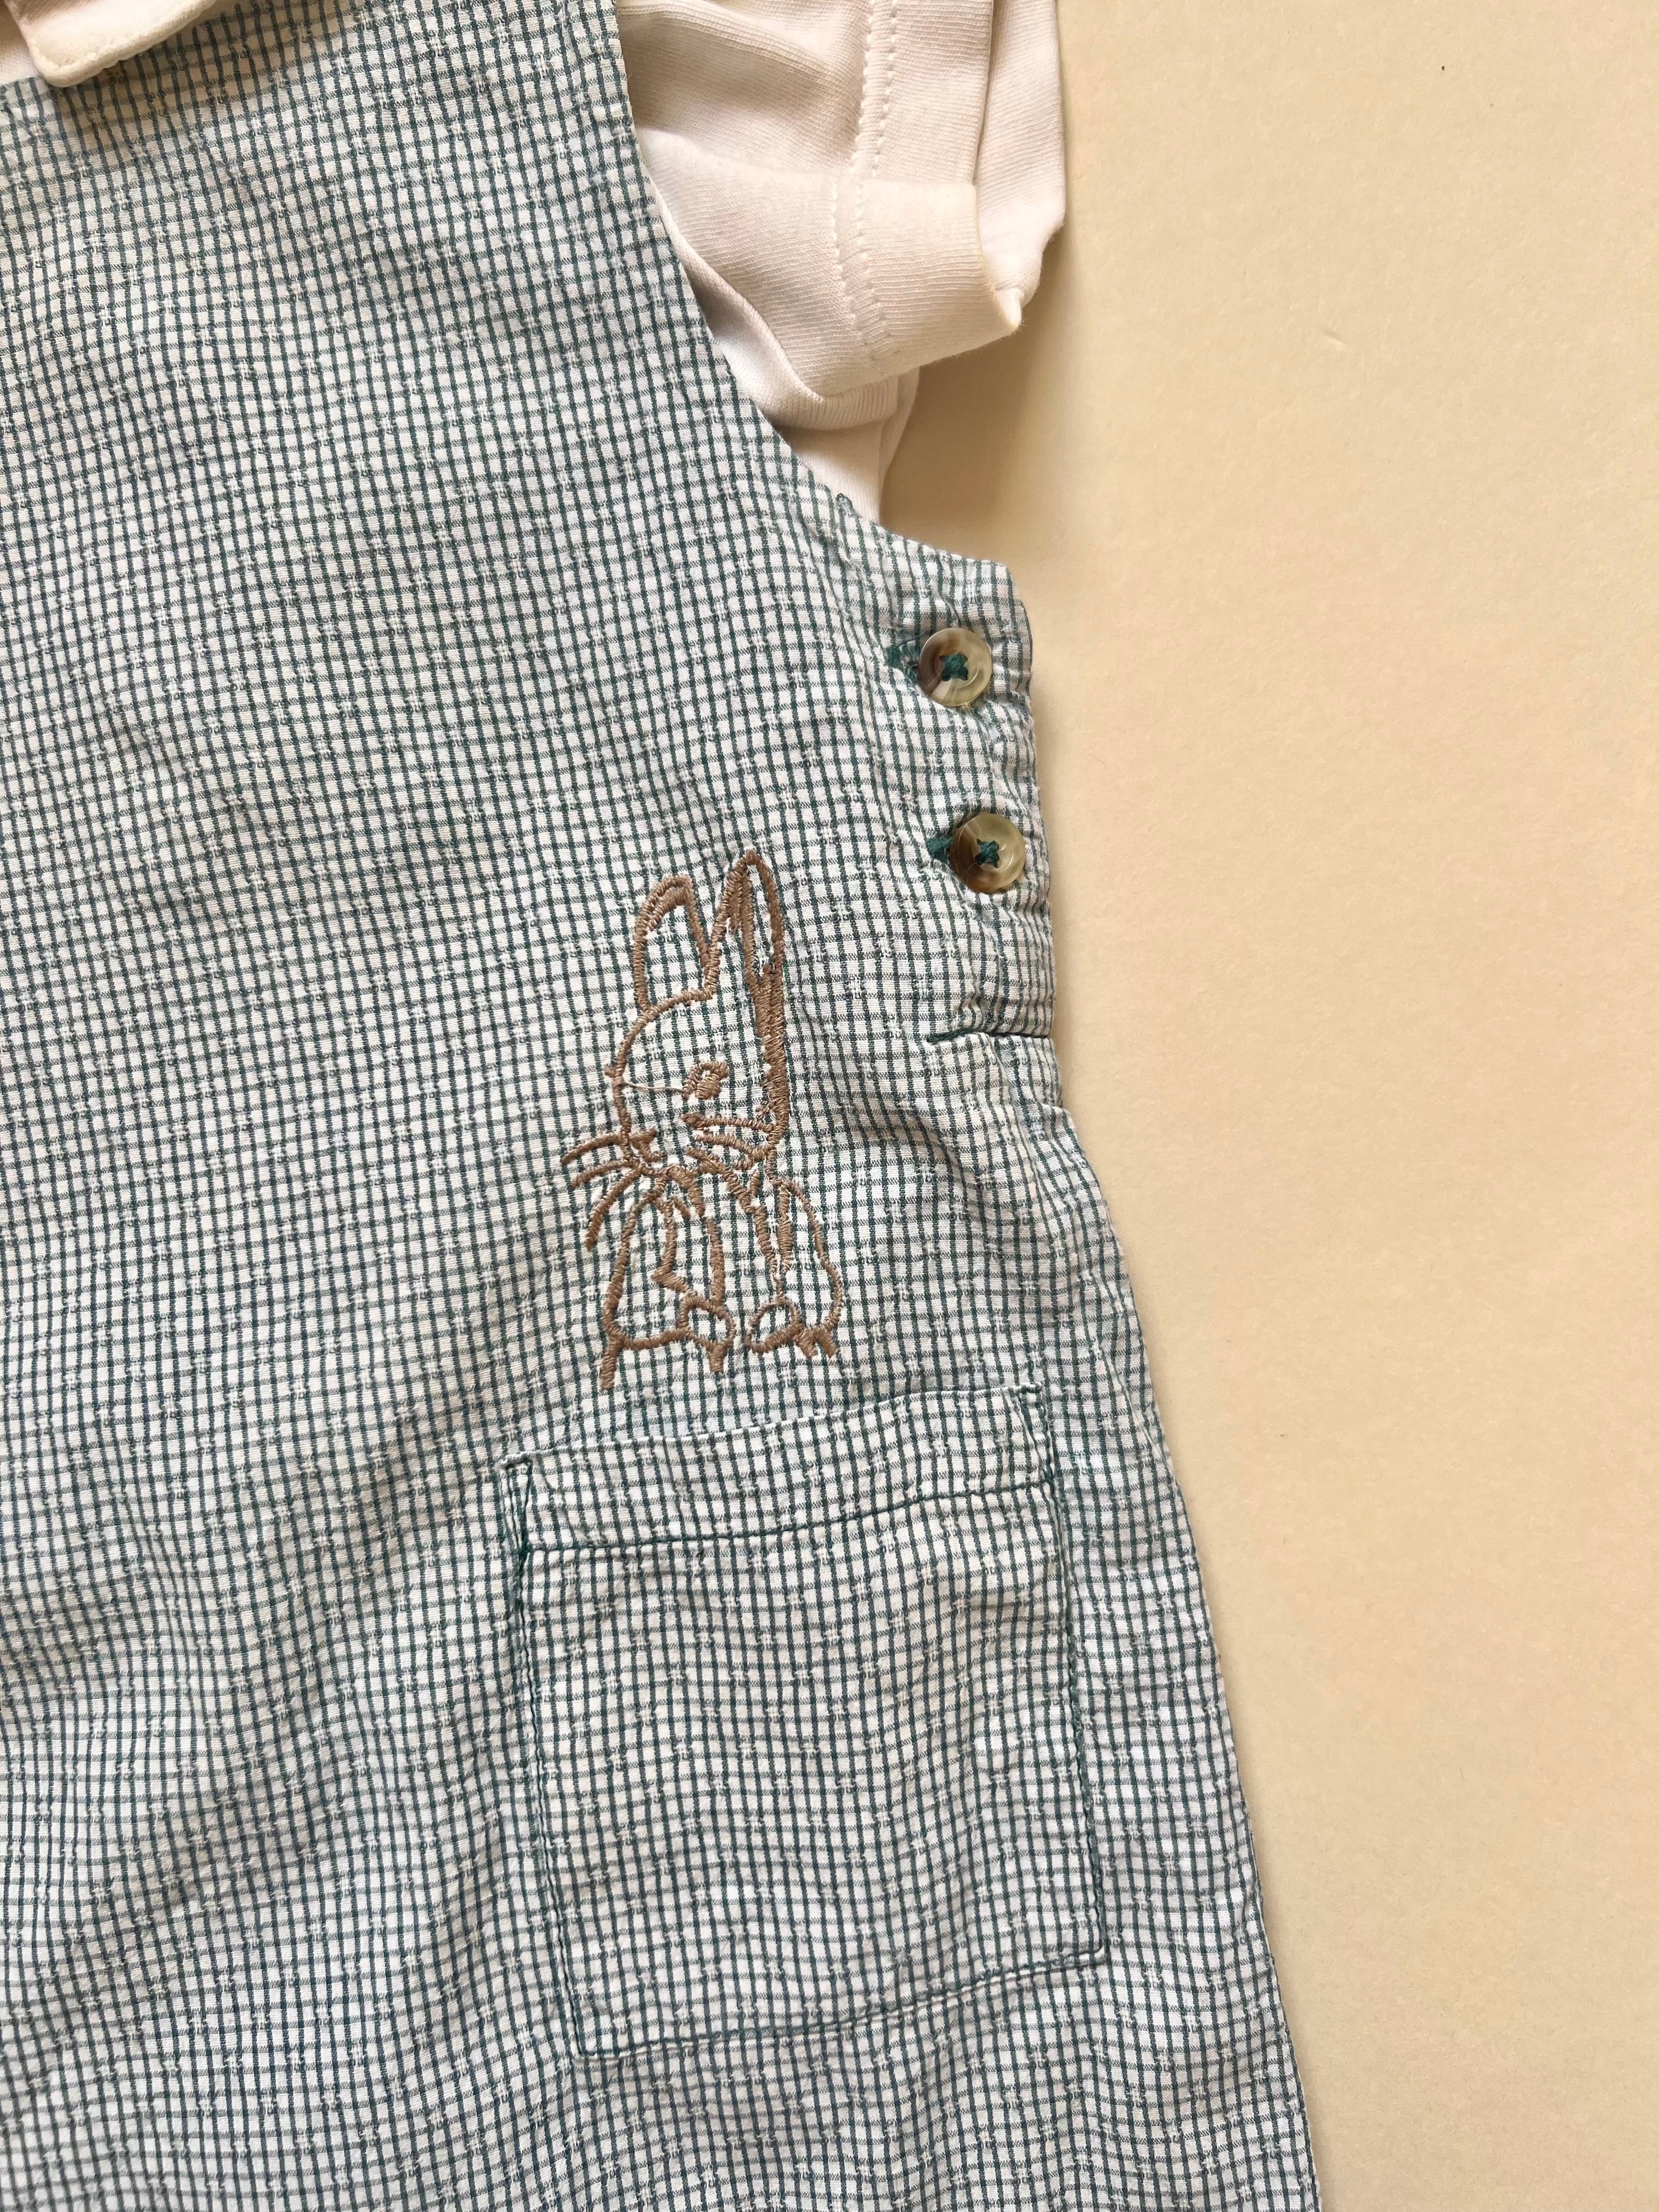 Peter Rabbit Romper & Body 3-6 Months